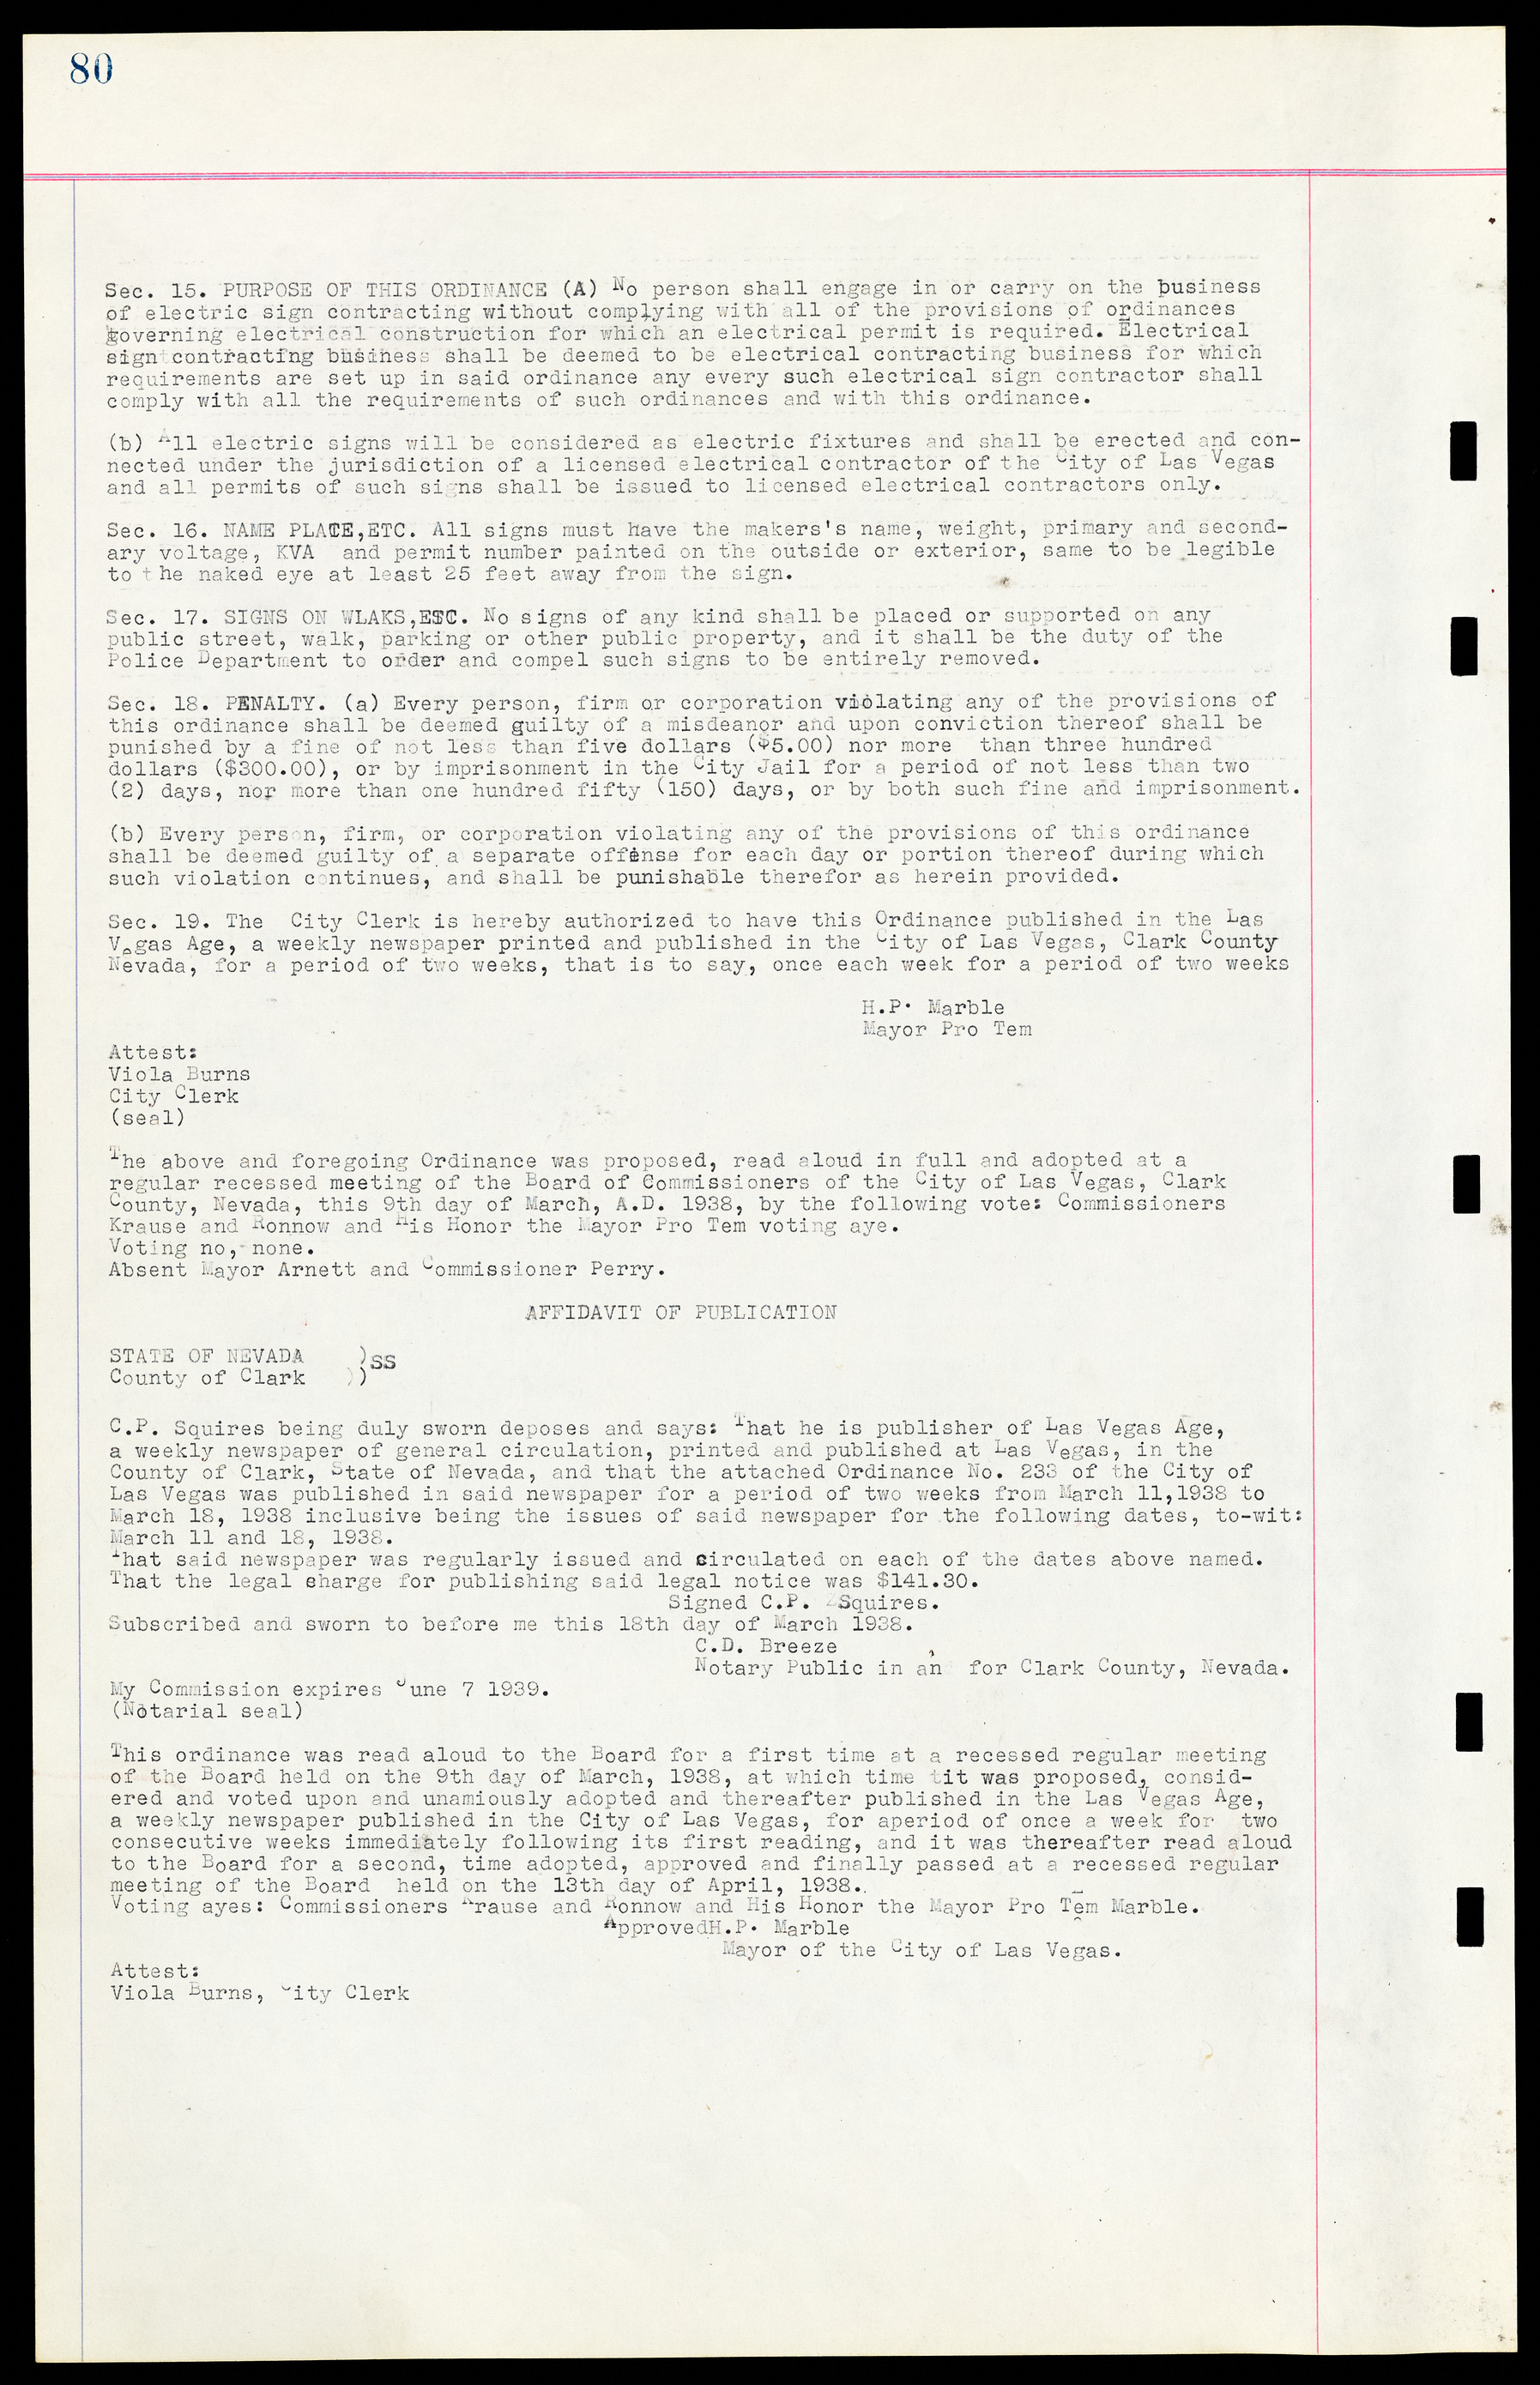 Las Vegas City Ordinances, March 31, 1933 to October 25, 1950, lvc000014-98